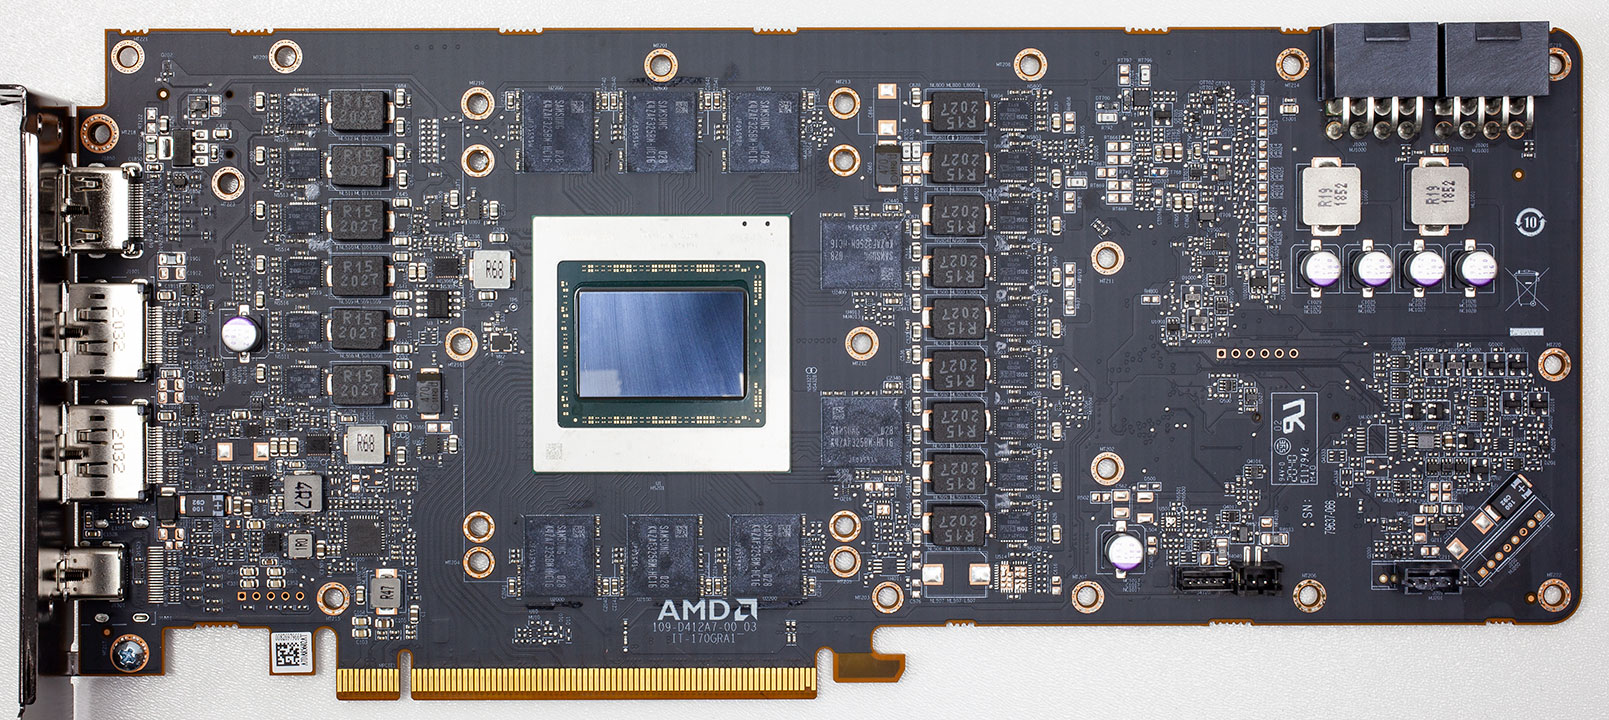 GIGABYTE Intros Radeon RX 6800 XT Gaming OC Pro